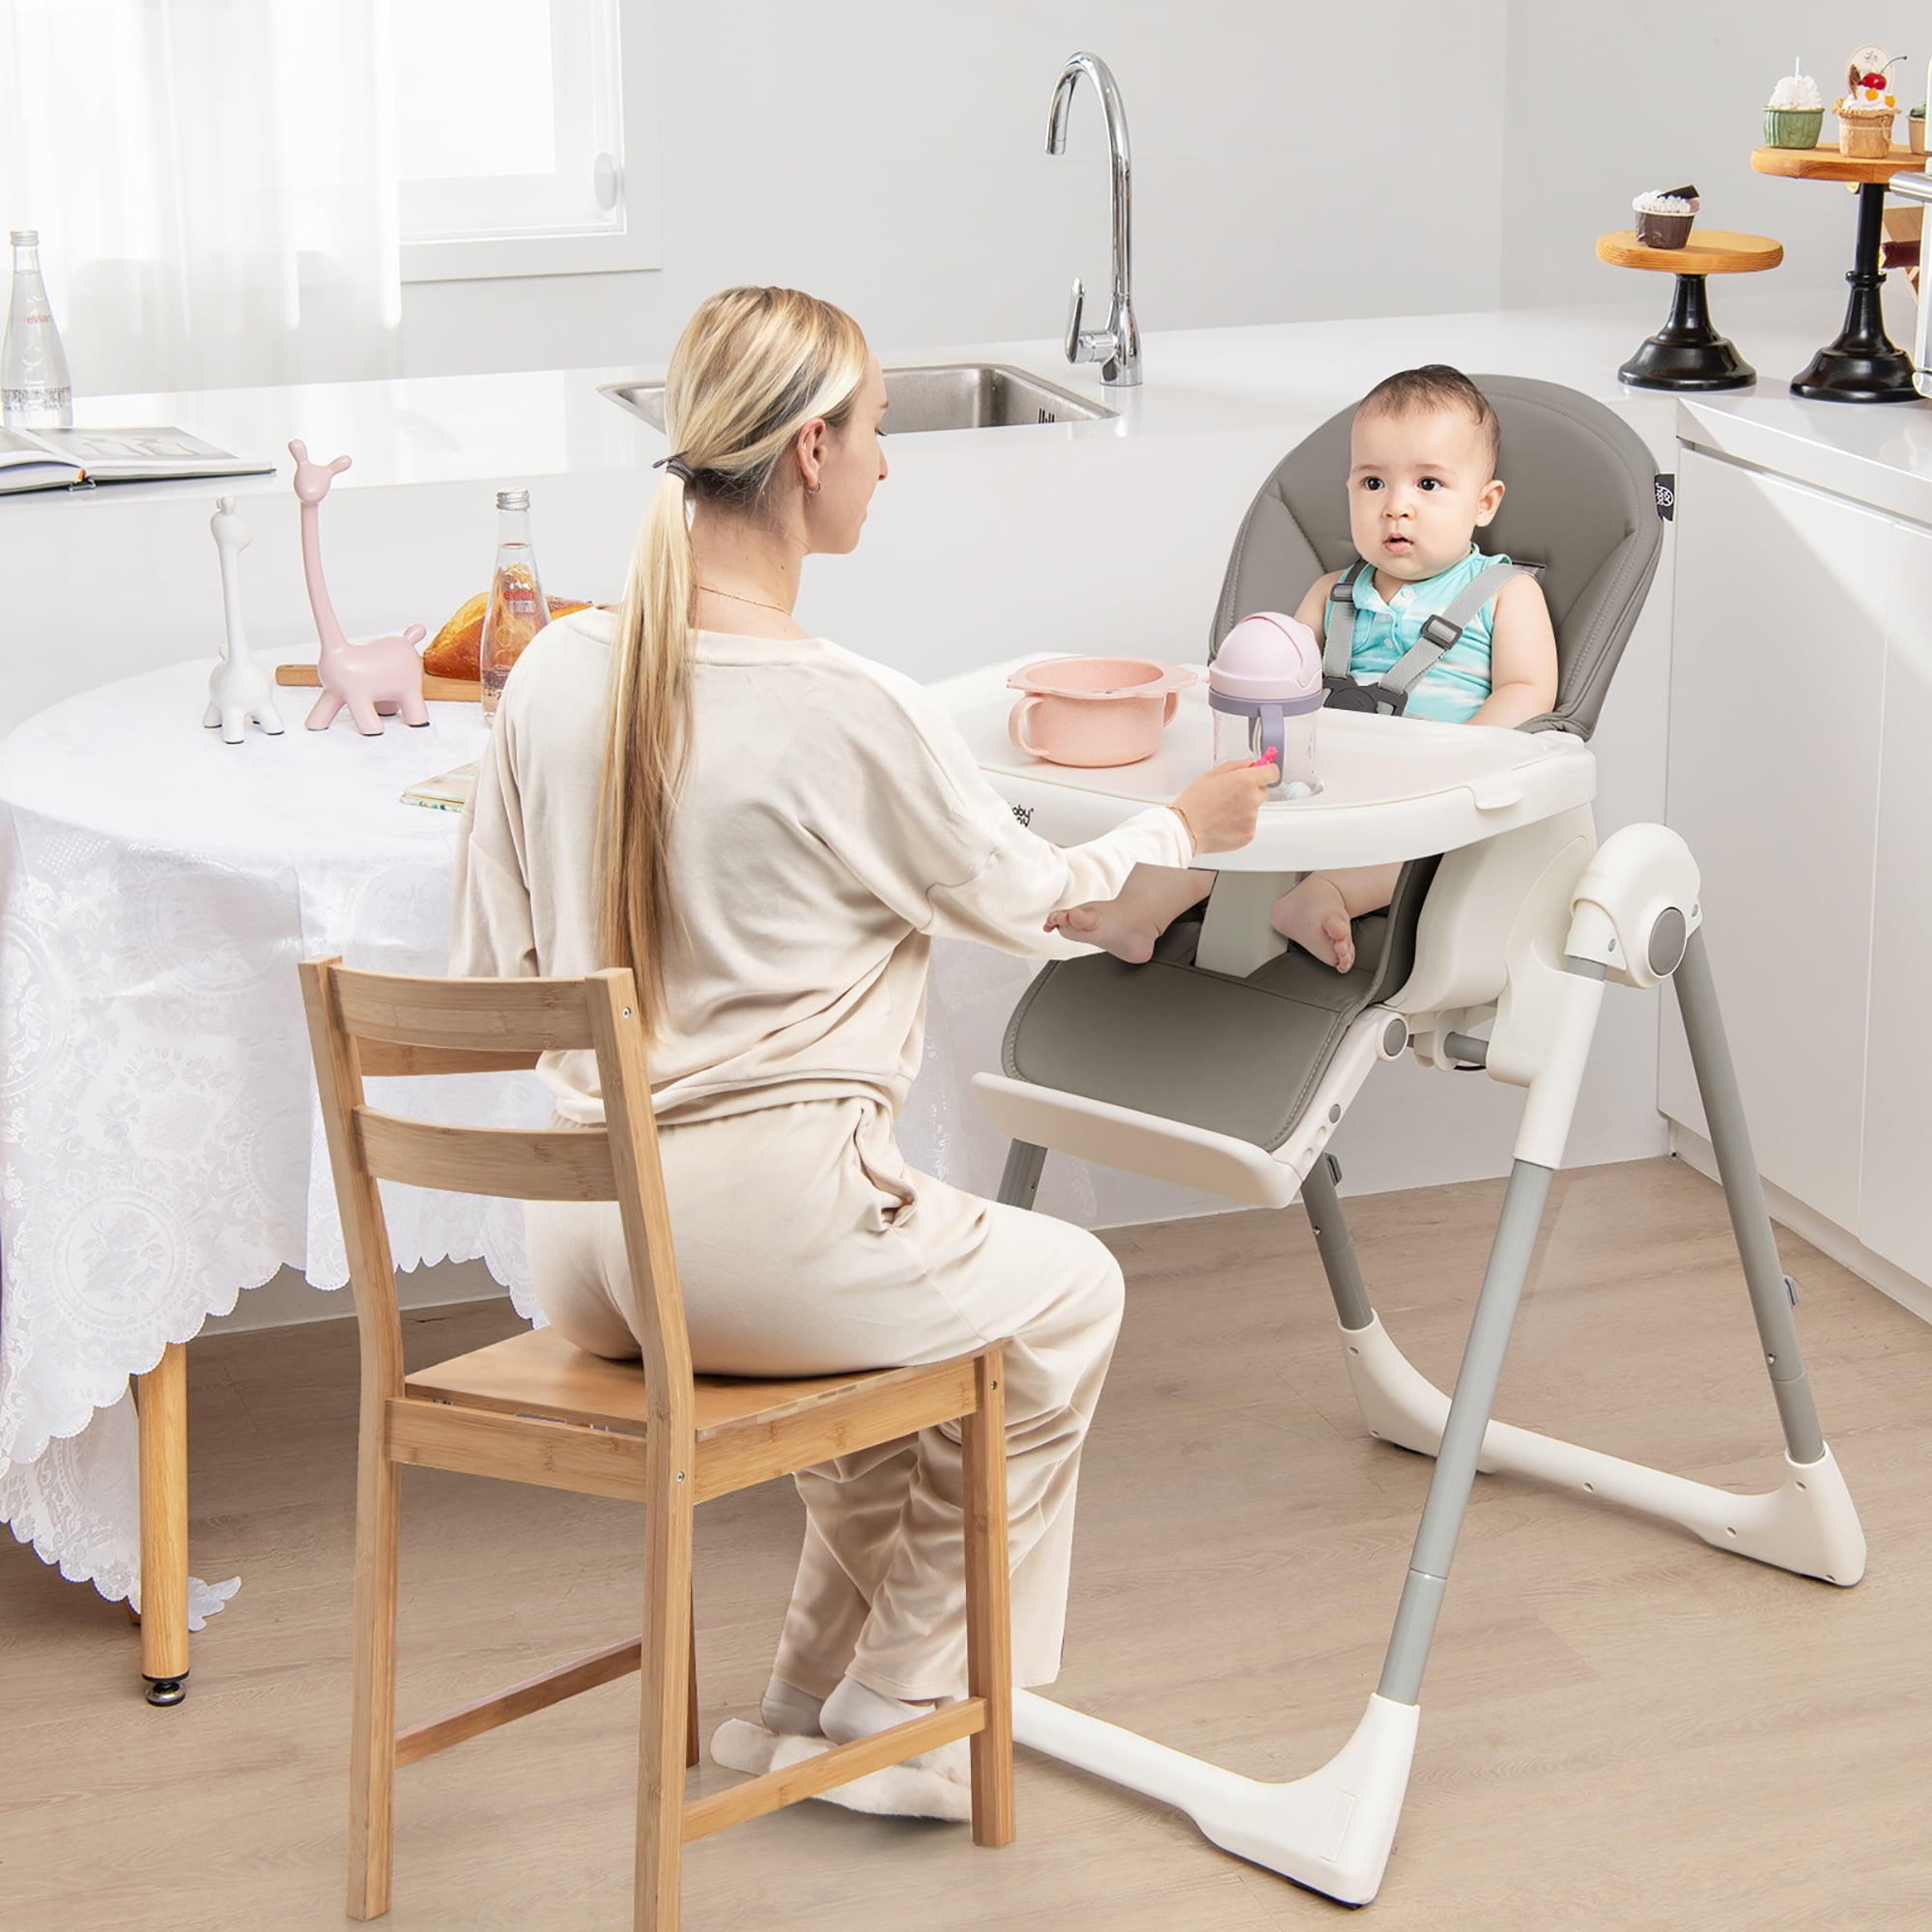 Mobile Infant Feeding Chair - Fully adjustable for enhanced comfort